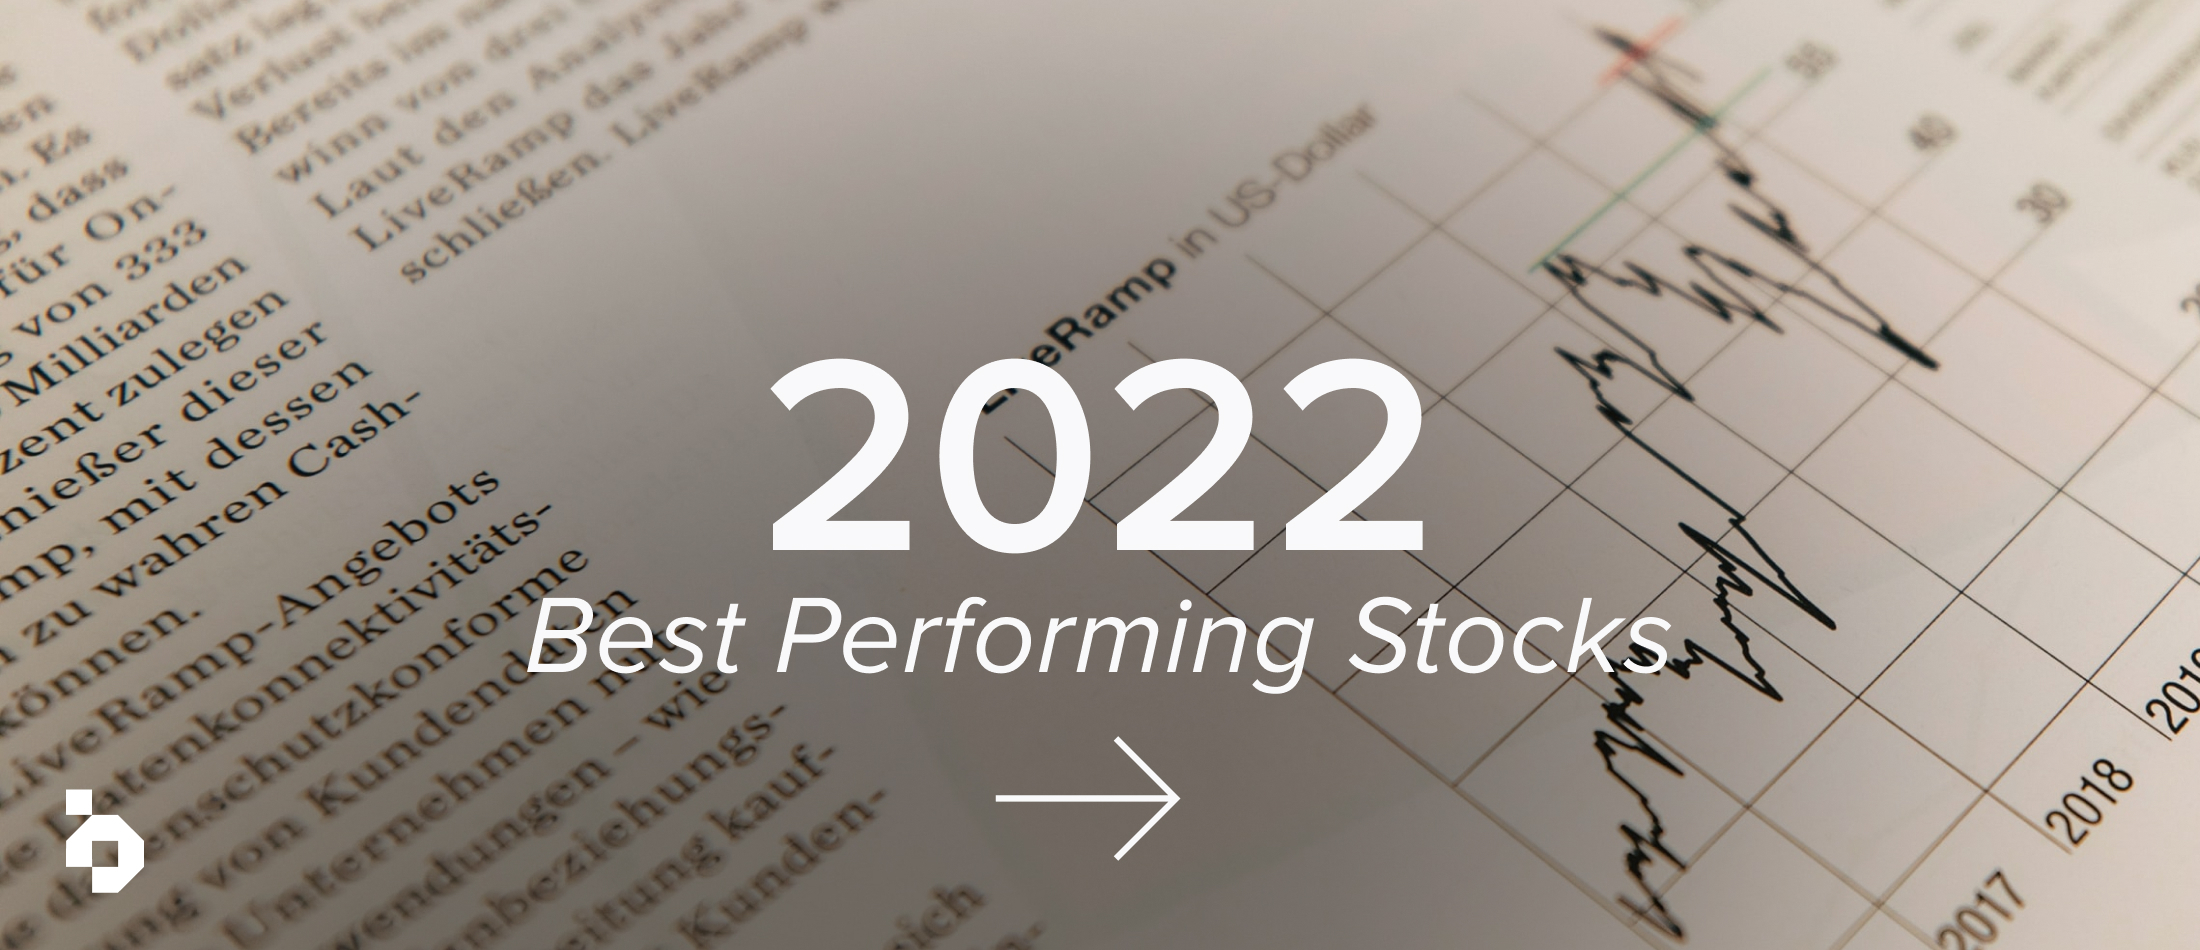 Best-Performing Stocks: July 2022